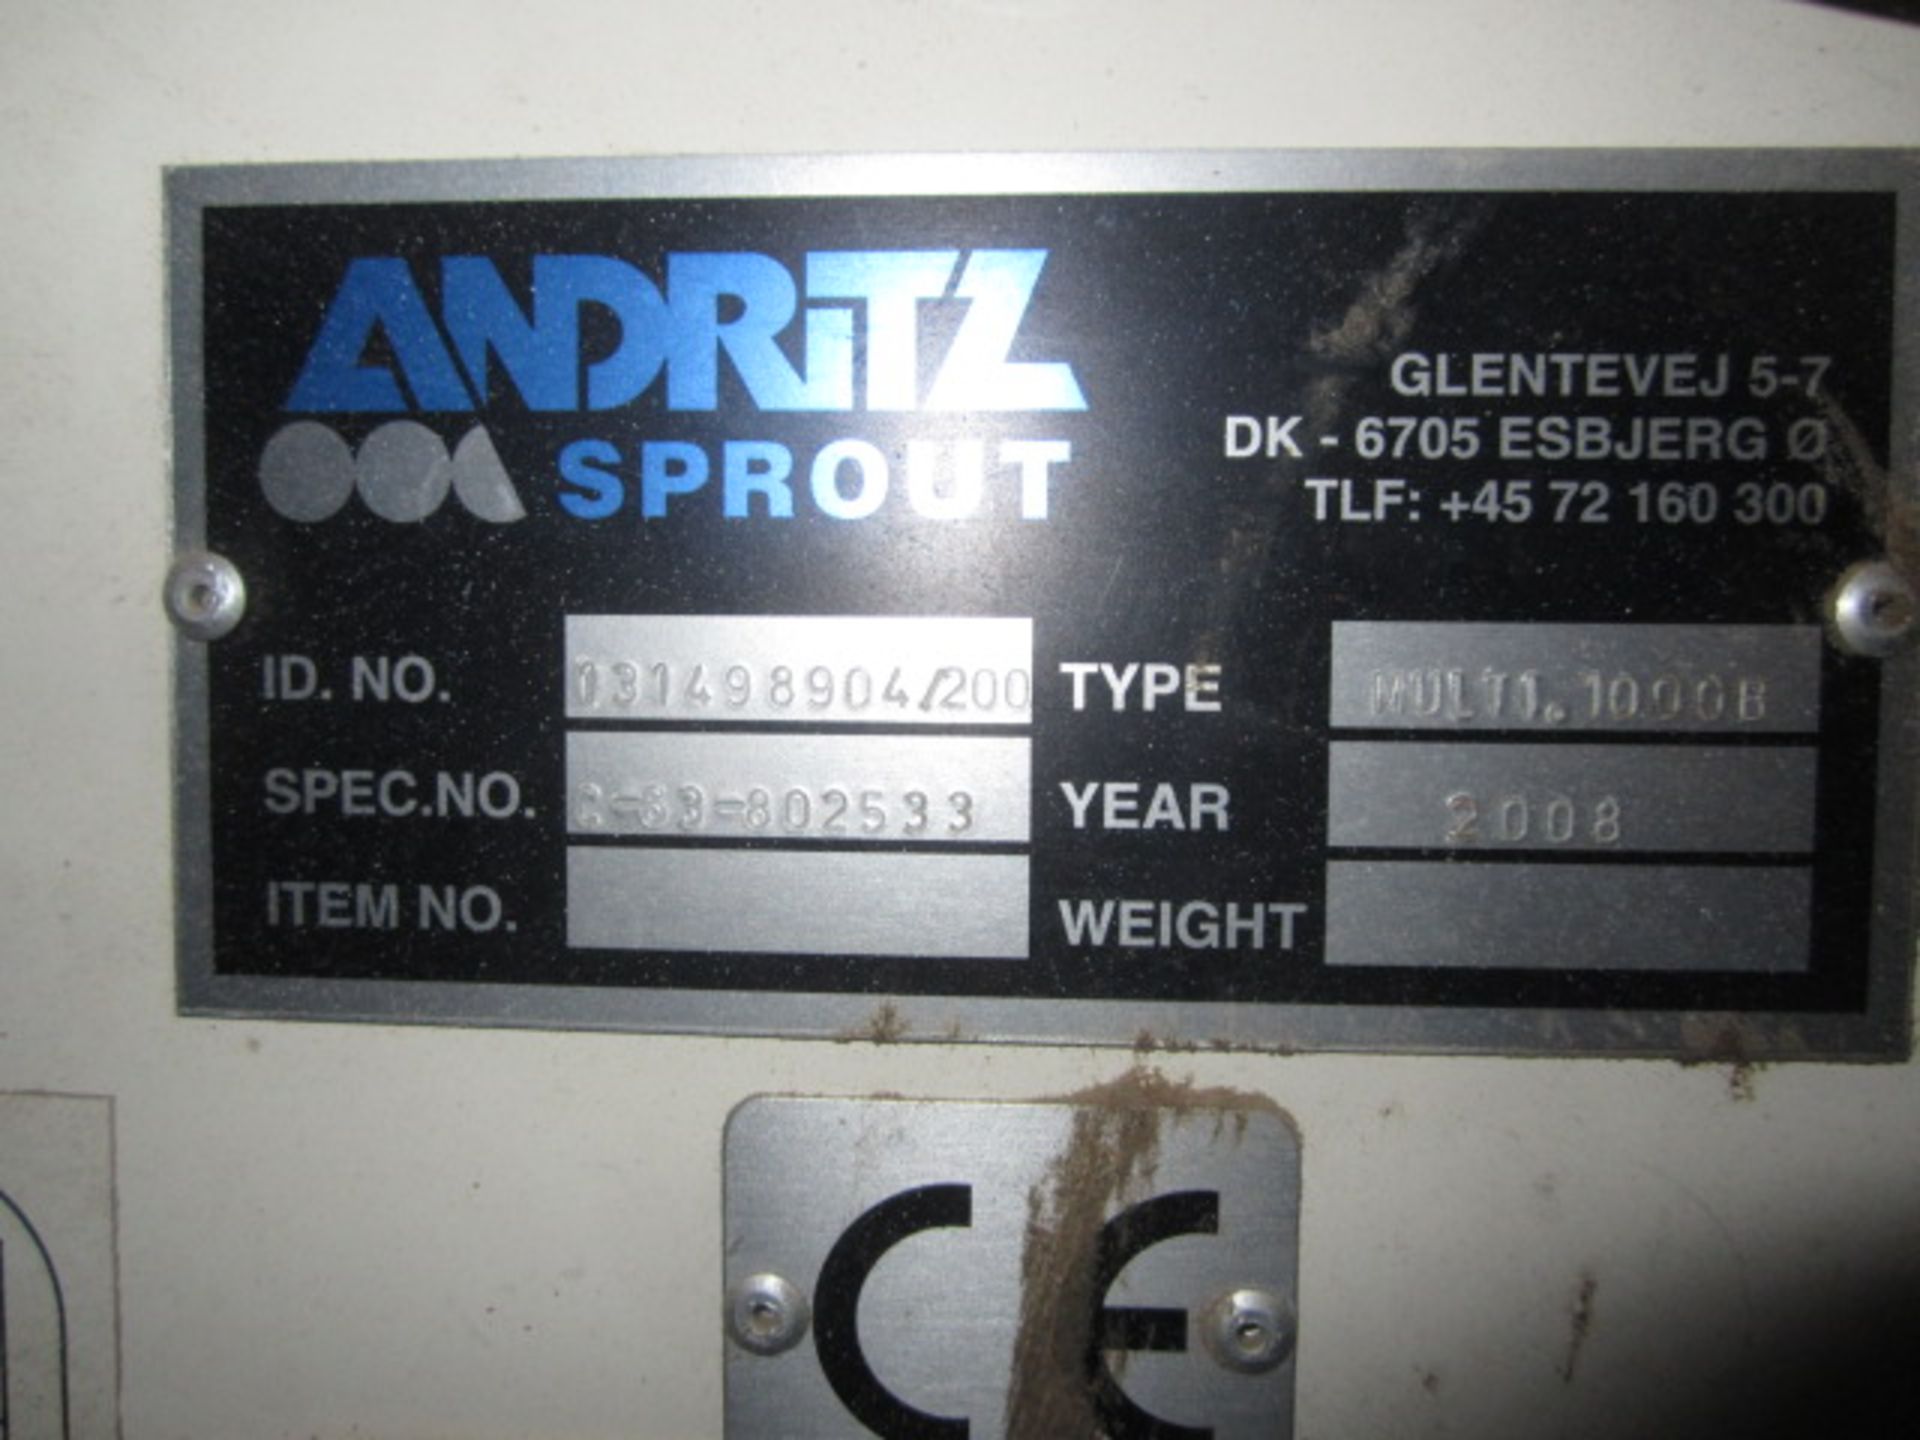 Andritz Feed & Biofuels Multi 1000B hammer mill, serial no: 131498904/ 200 (2008), spec no: C-63- - Image 6 of 12